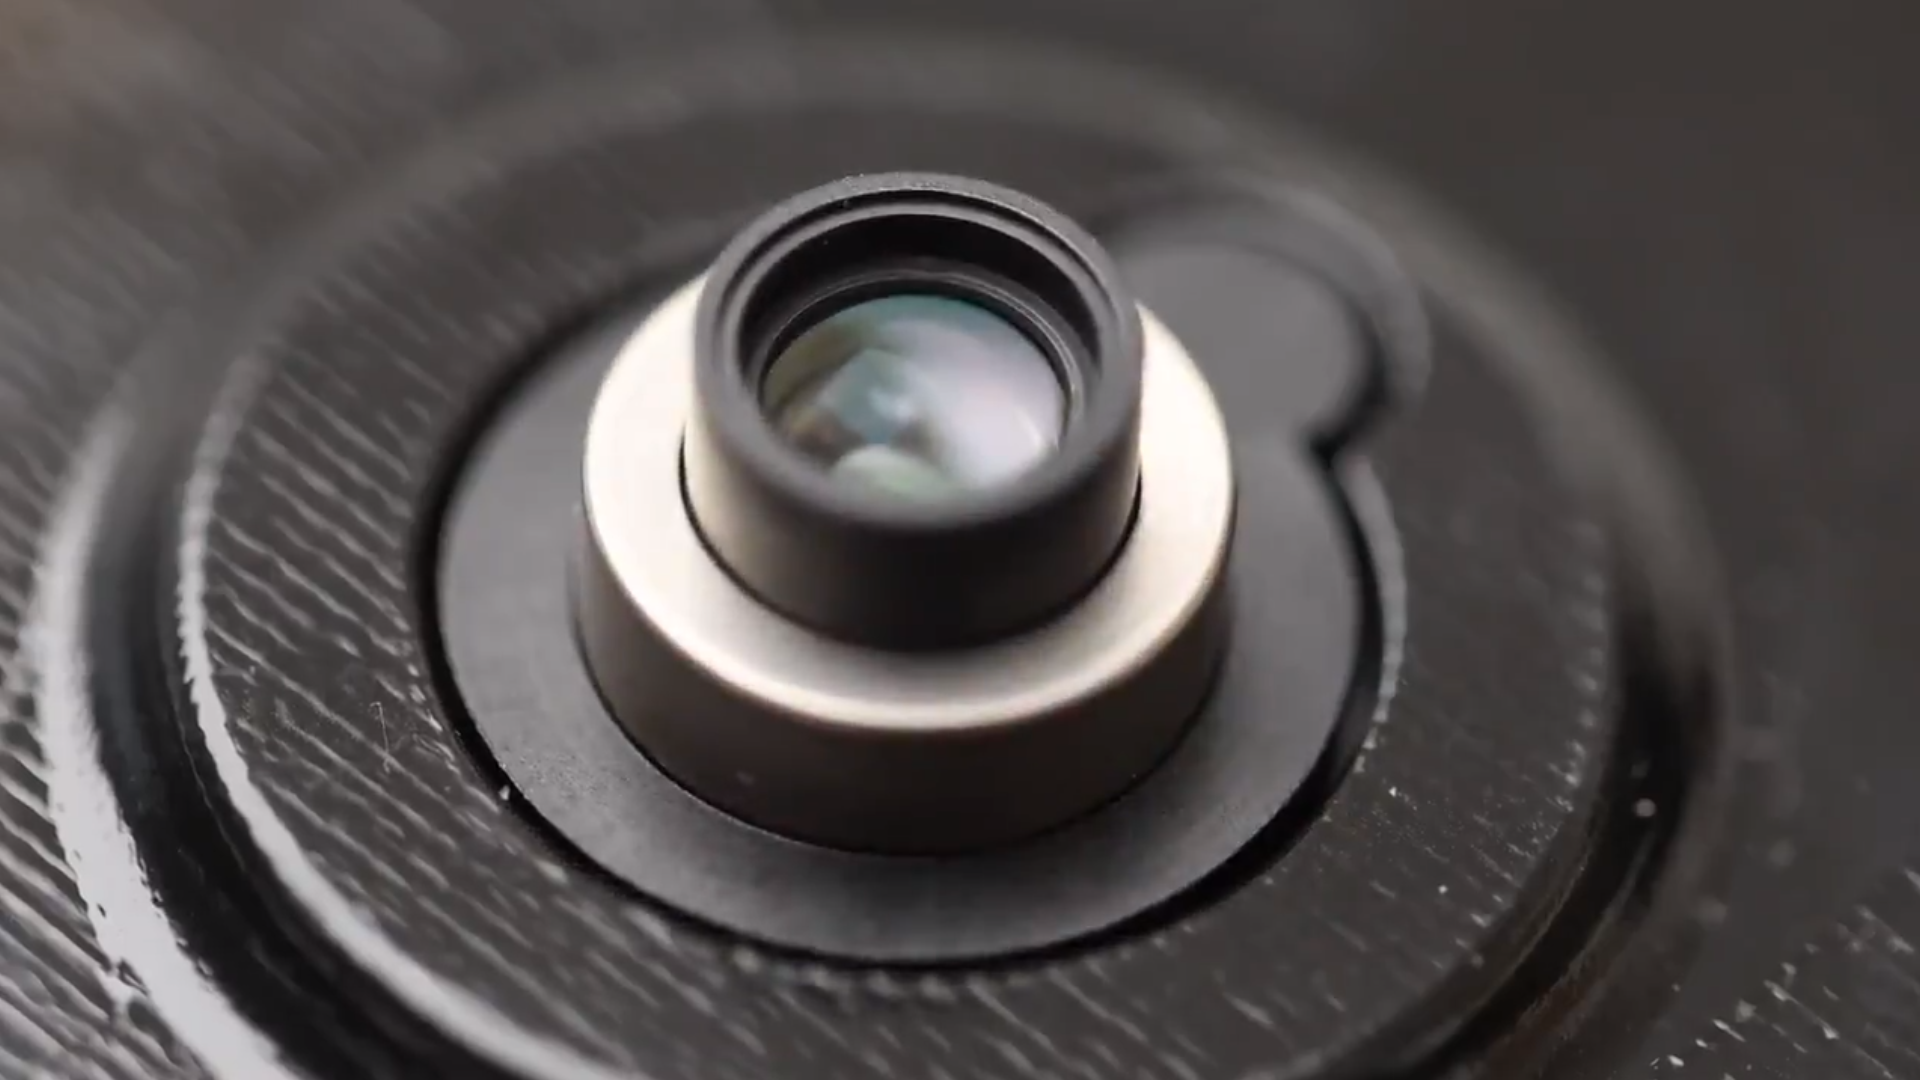 Xiaomi is testing retractable camera lenses for phones | DeviceDaily.com